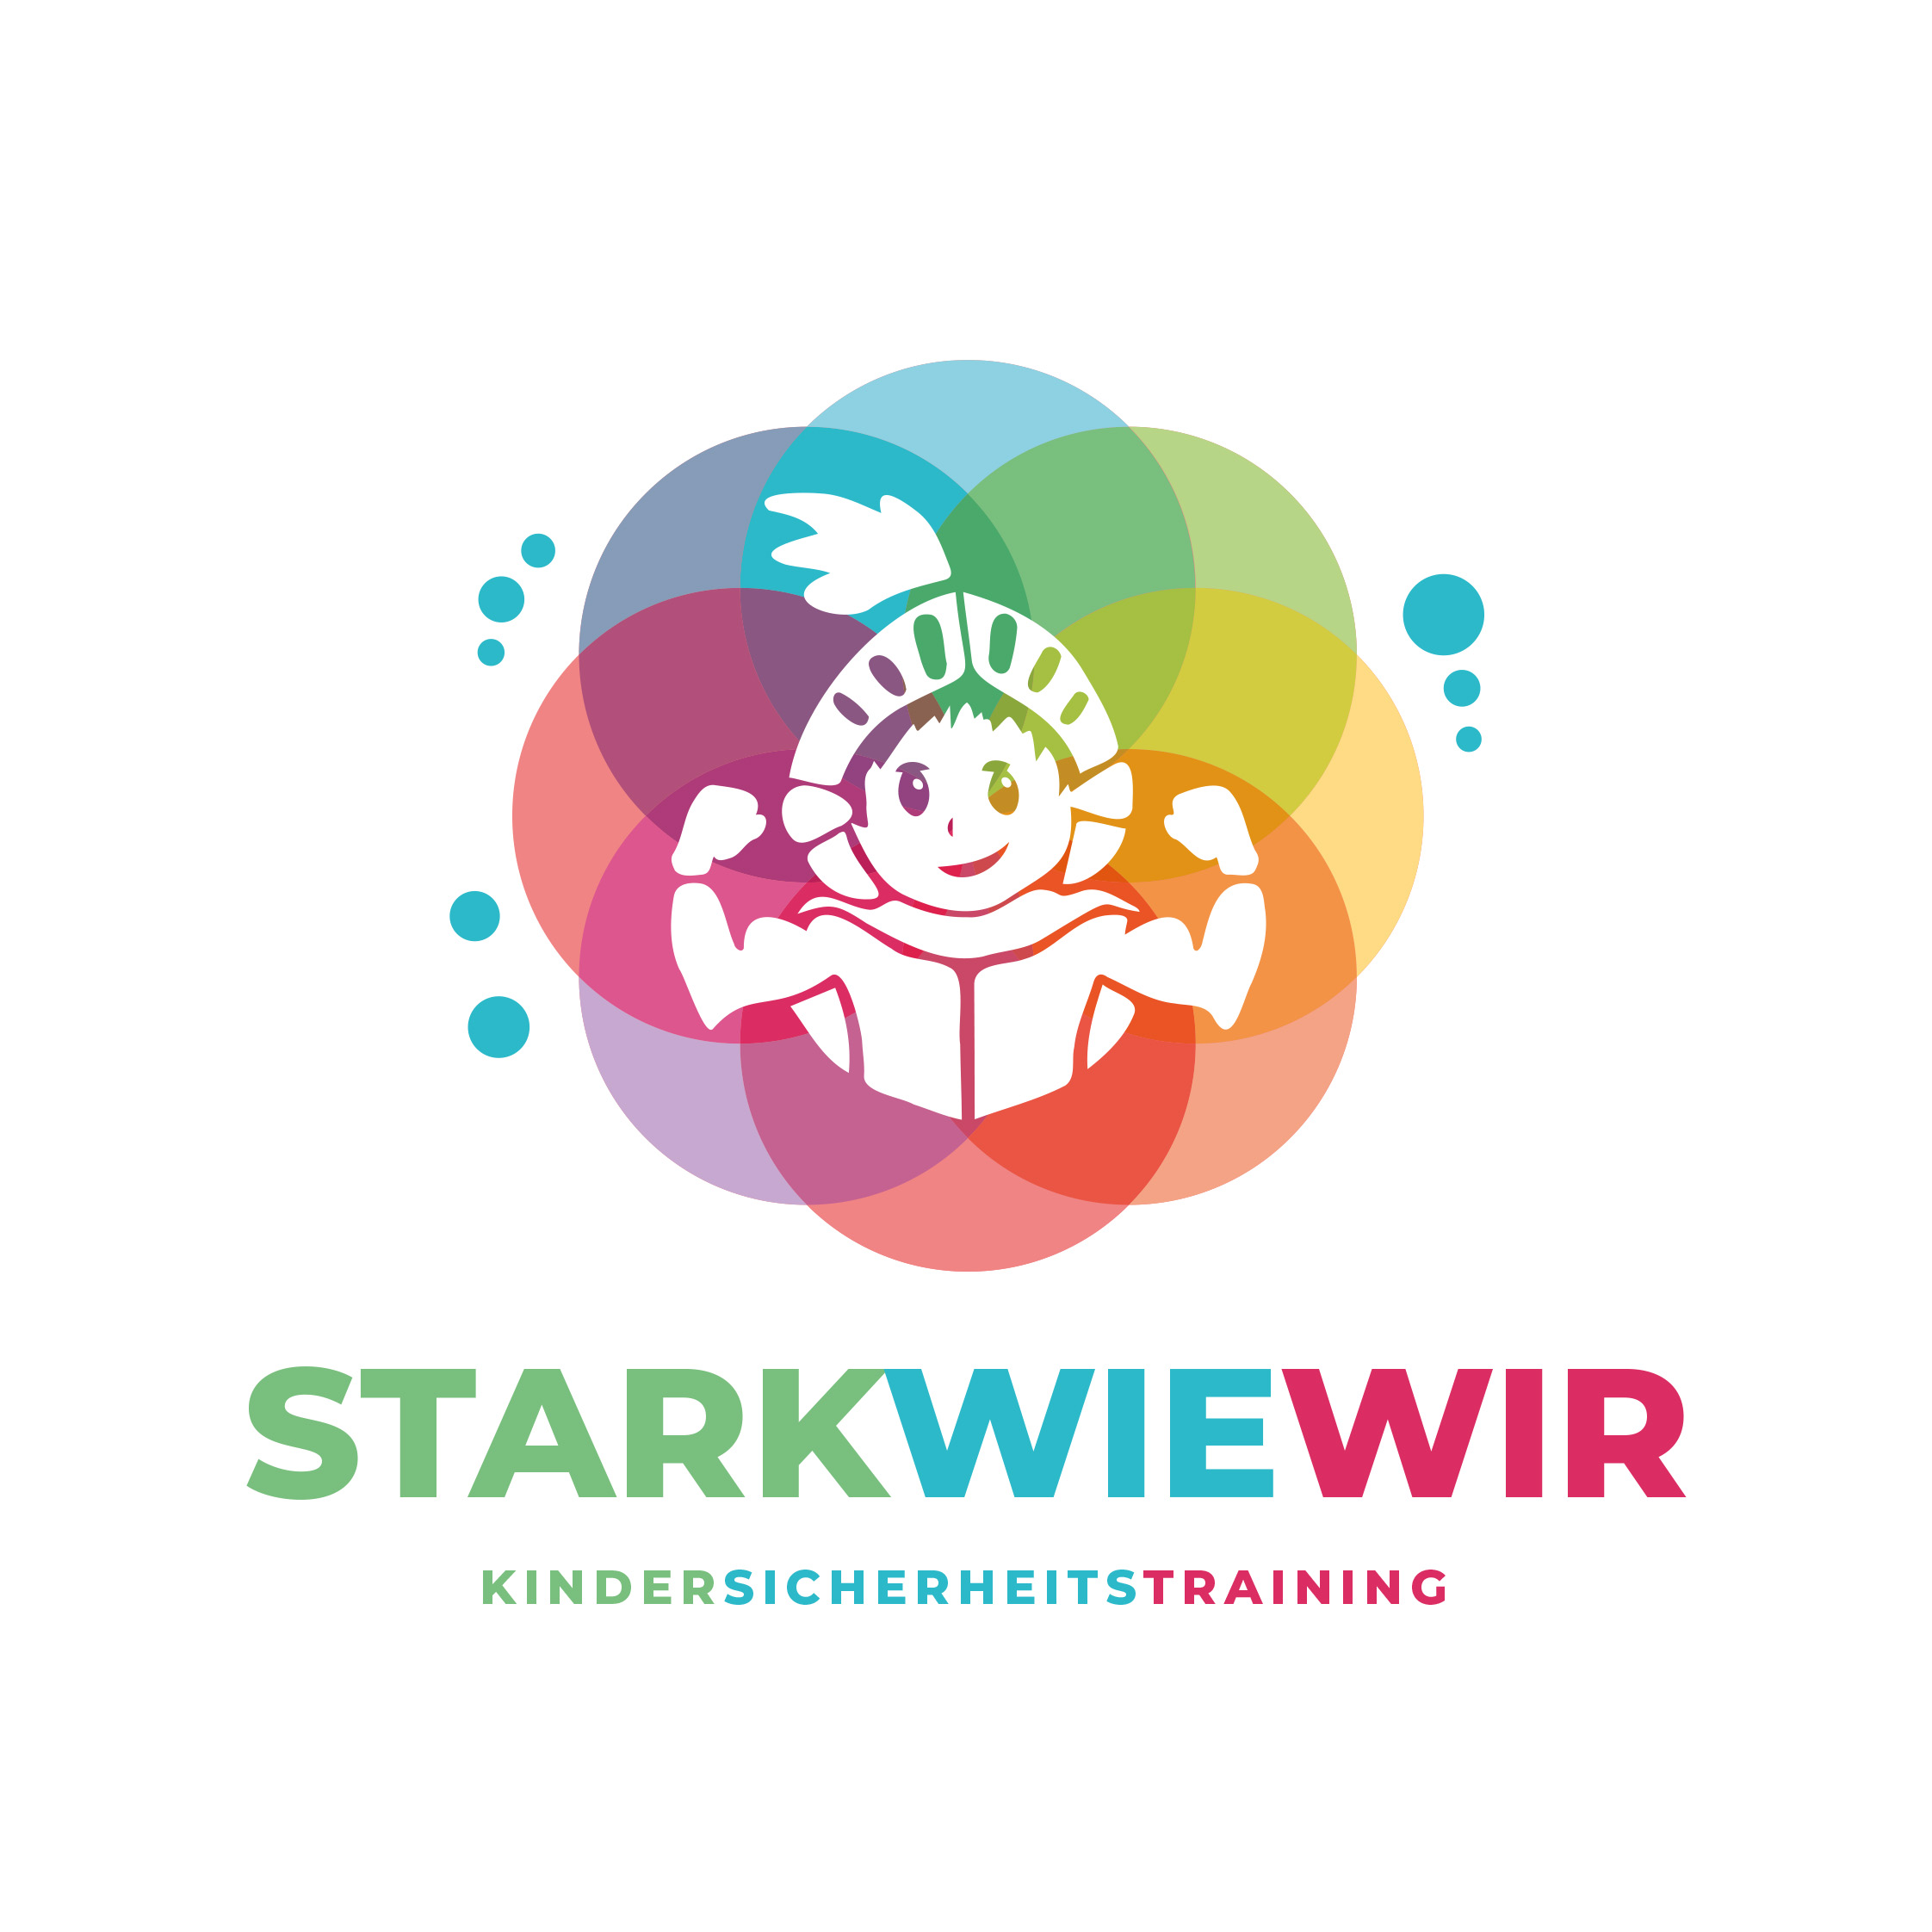 Stark wie wir - Self Defense School - Berlin - 01515 8405824 Germany | ShowMeLocal.com